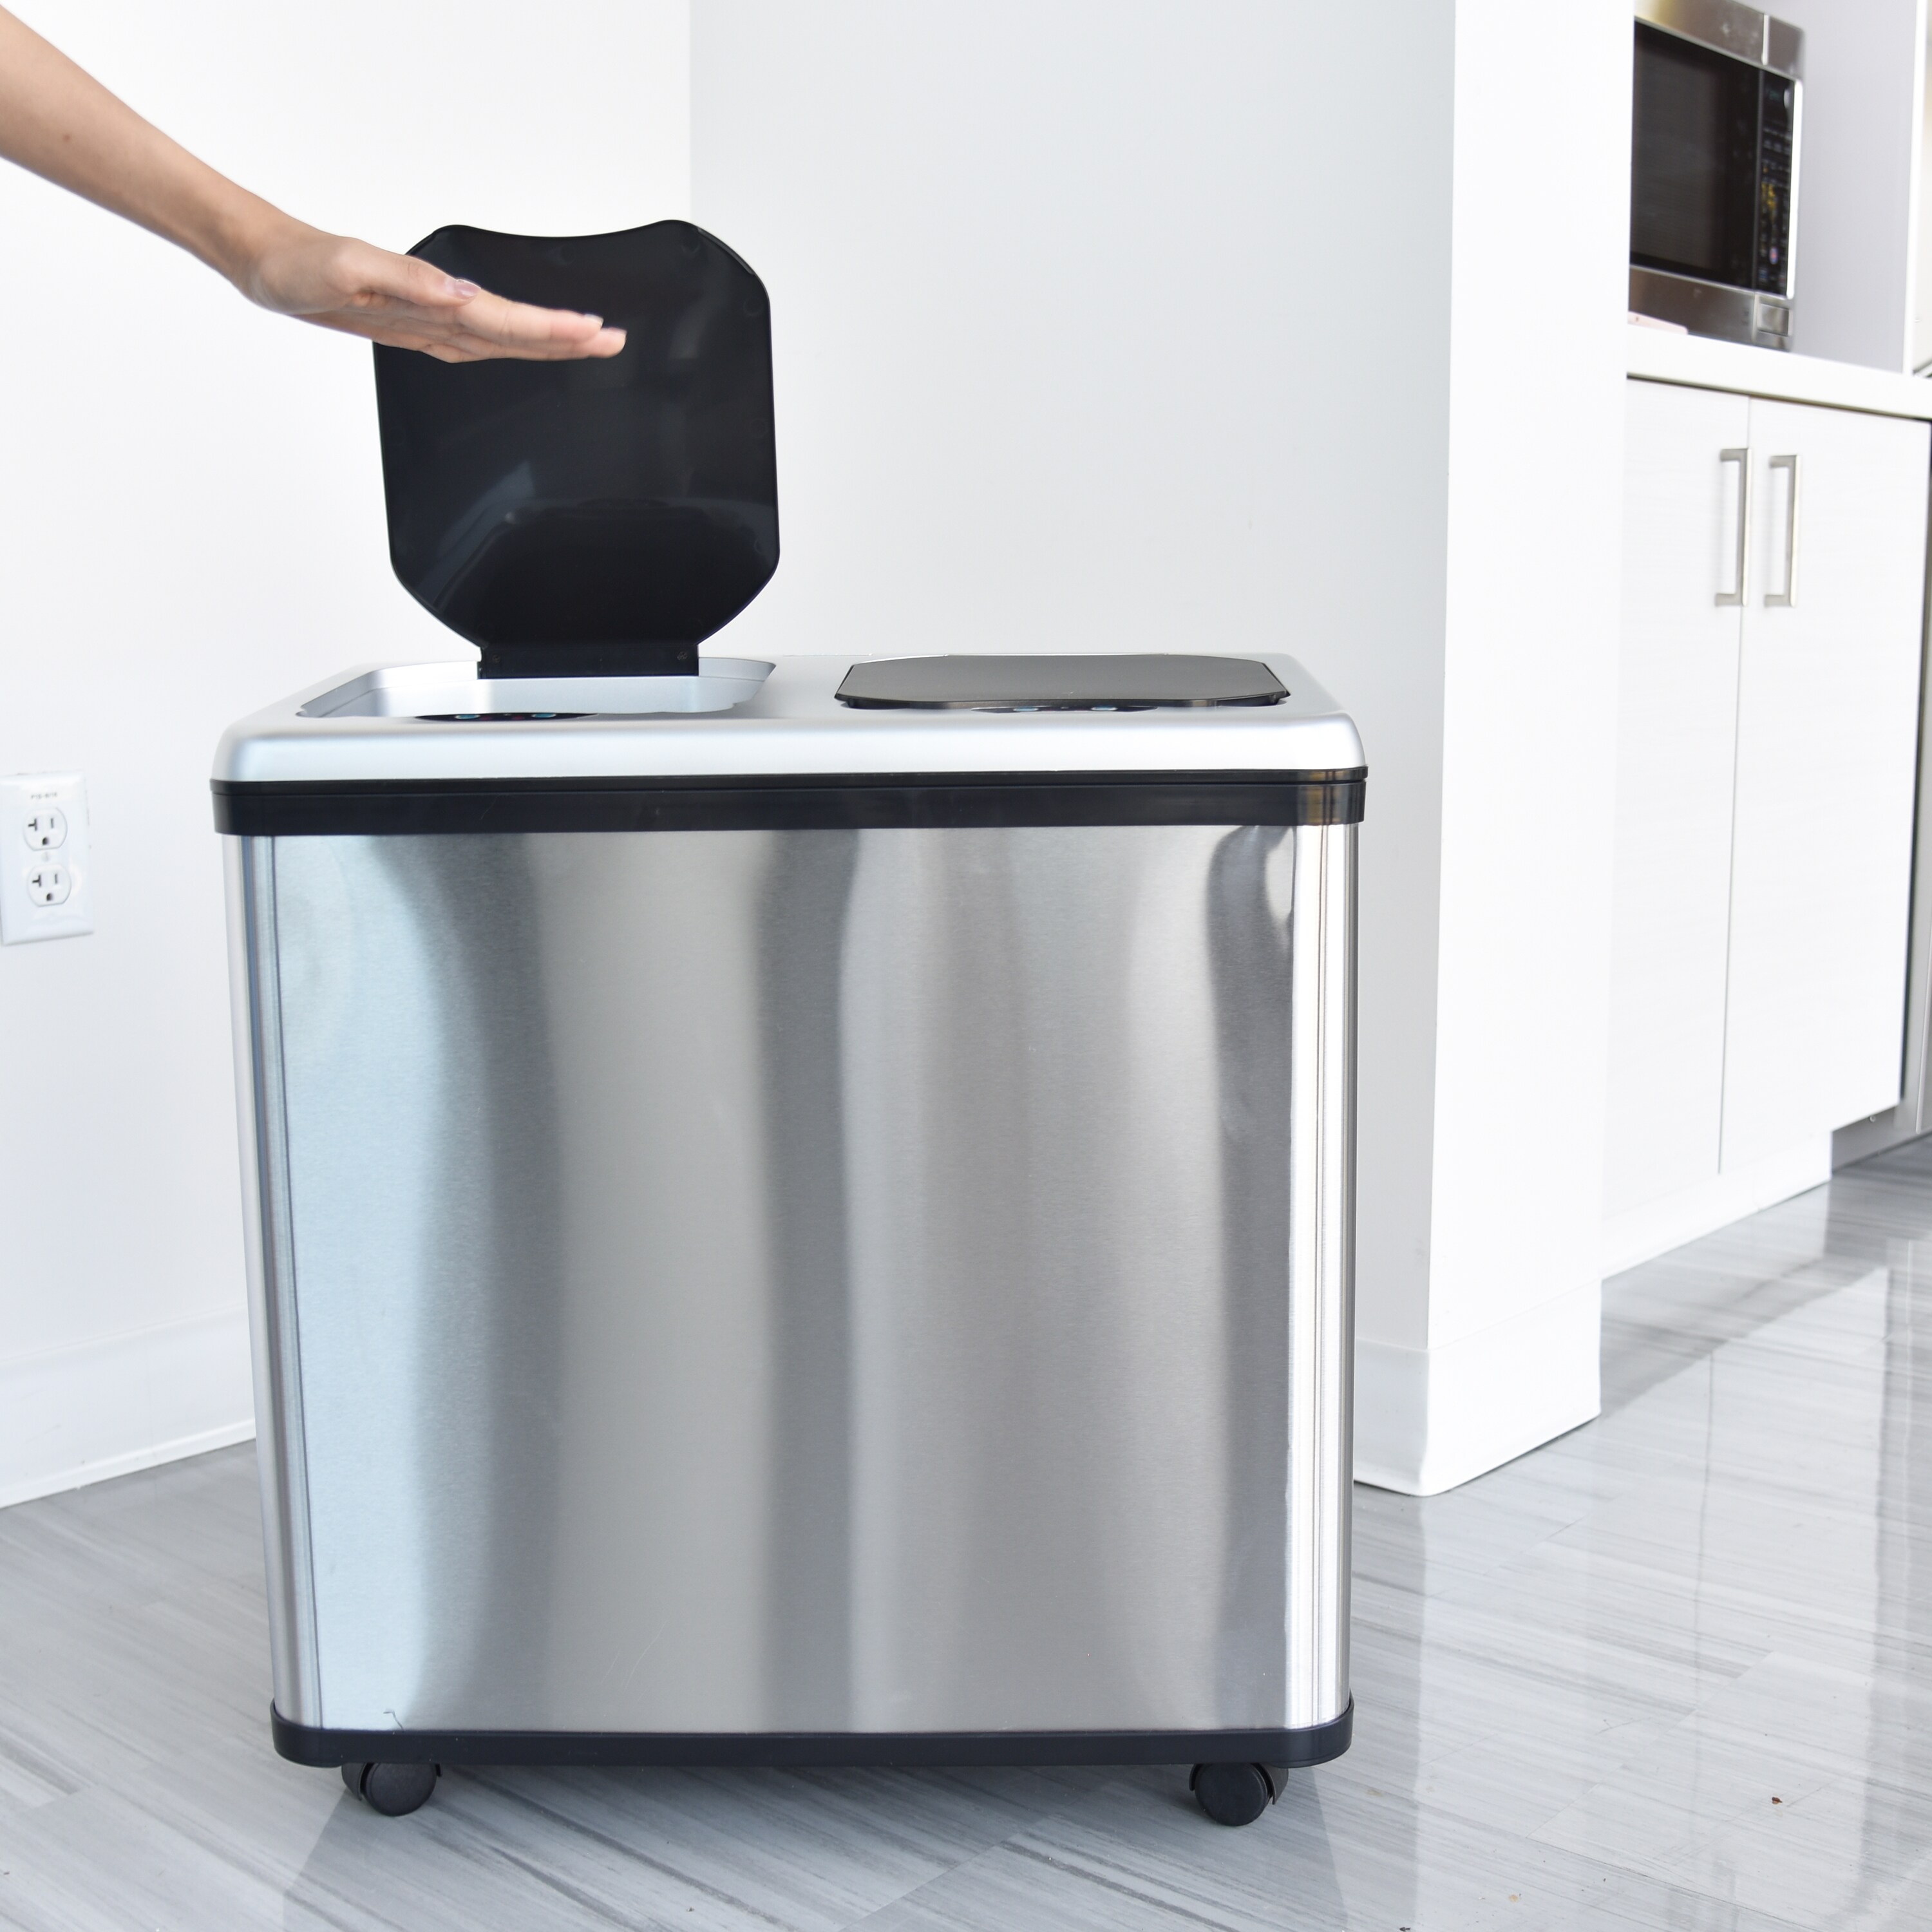 Buy Sensor Kitchen Trash Cans Online At Overstock Our Best Kitchen